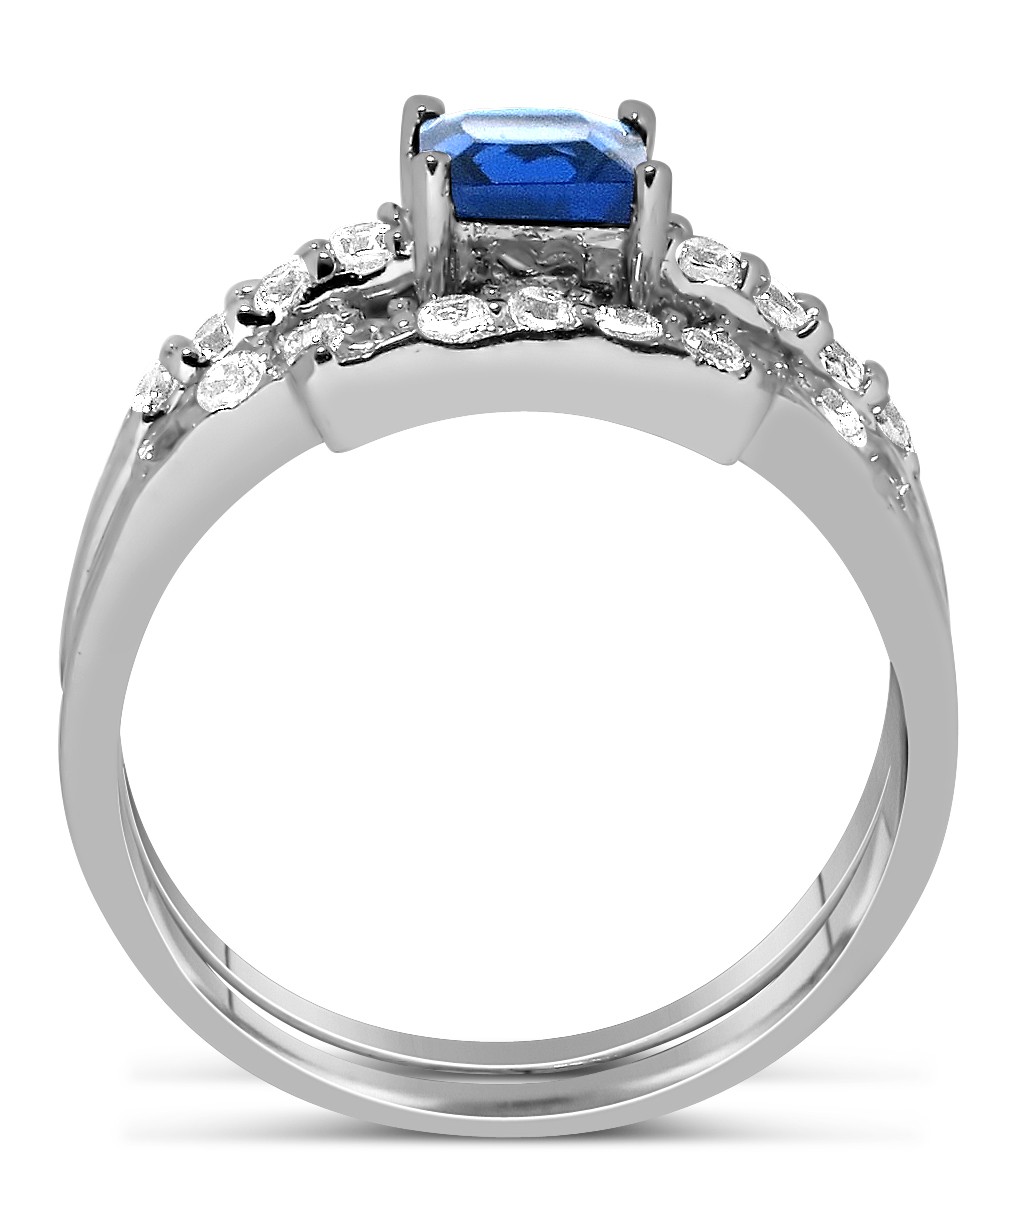 Luxurious 2 Carat Princess cut blue sapphire and White Diamond Wedding Ring Set JeenJewels